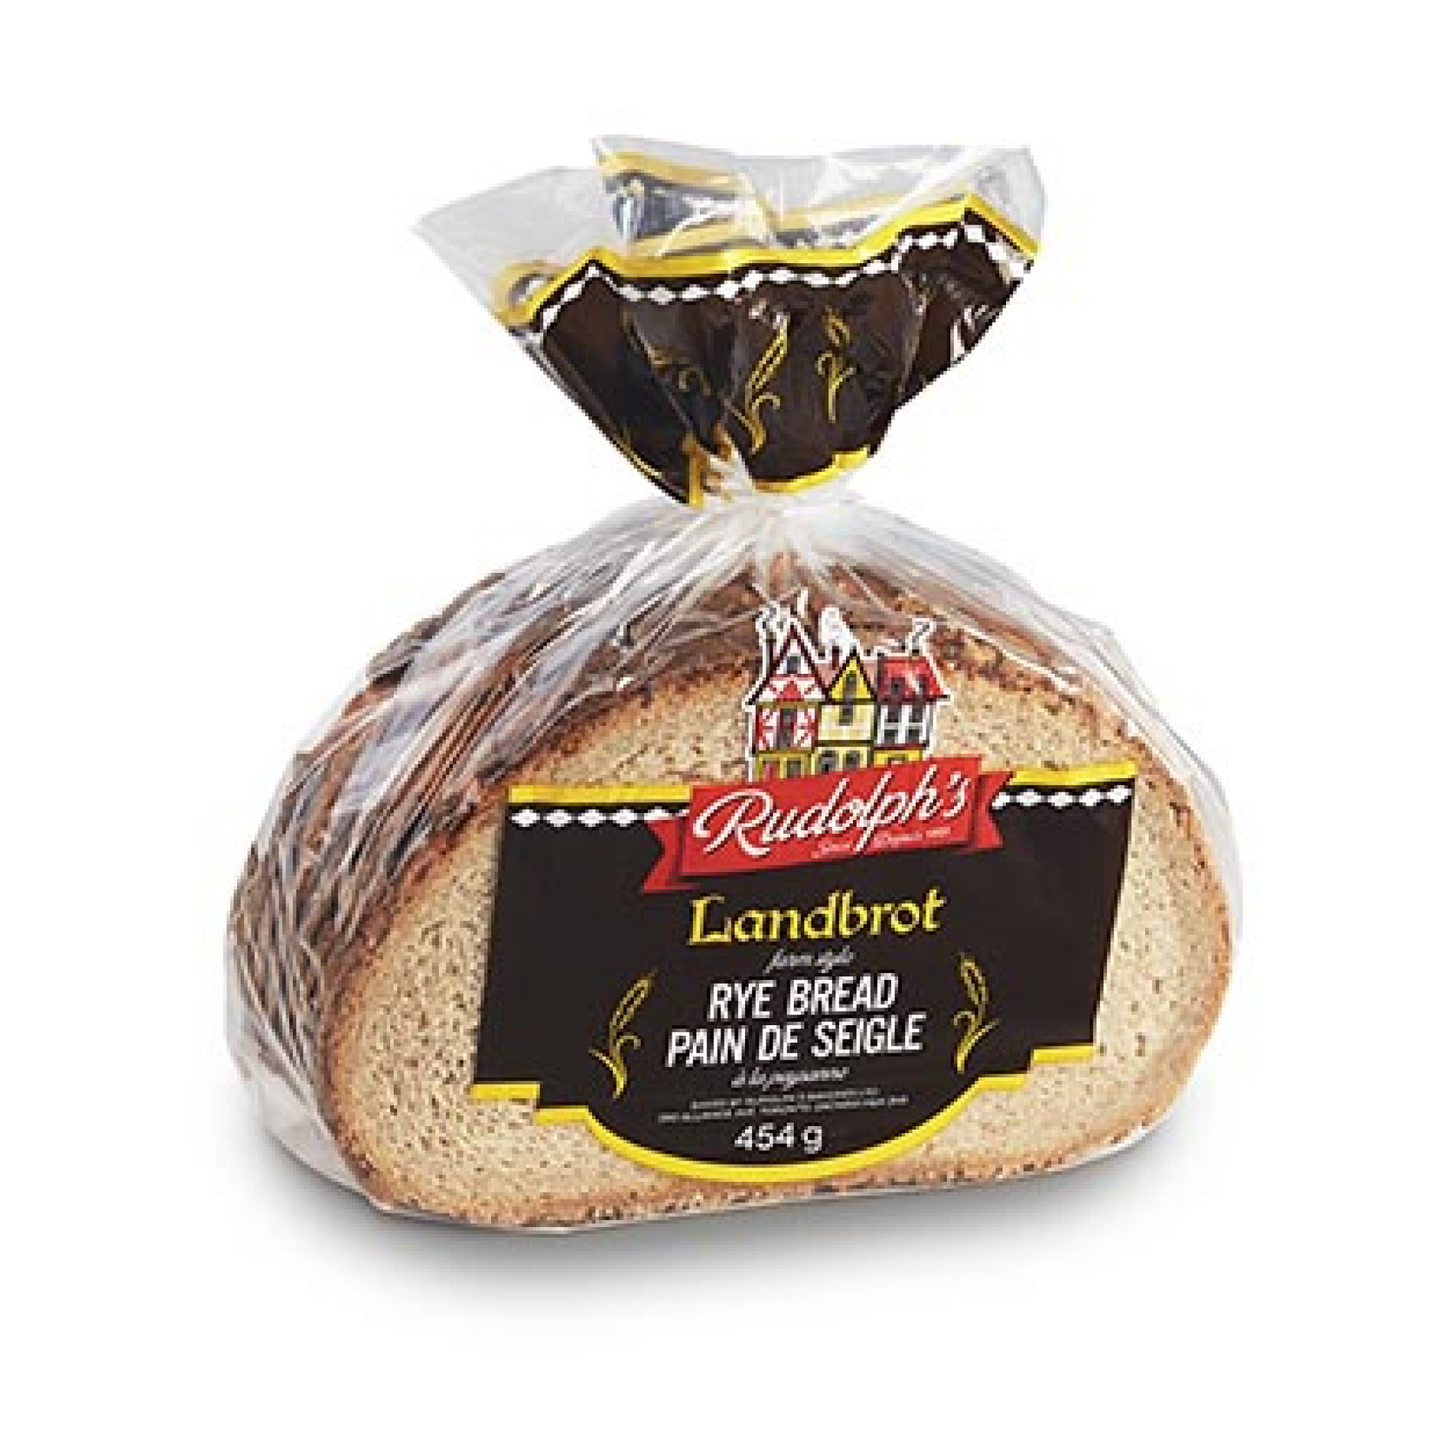 Rudolph’s Landbrot Farm-style Rye Bread 454g